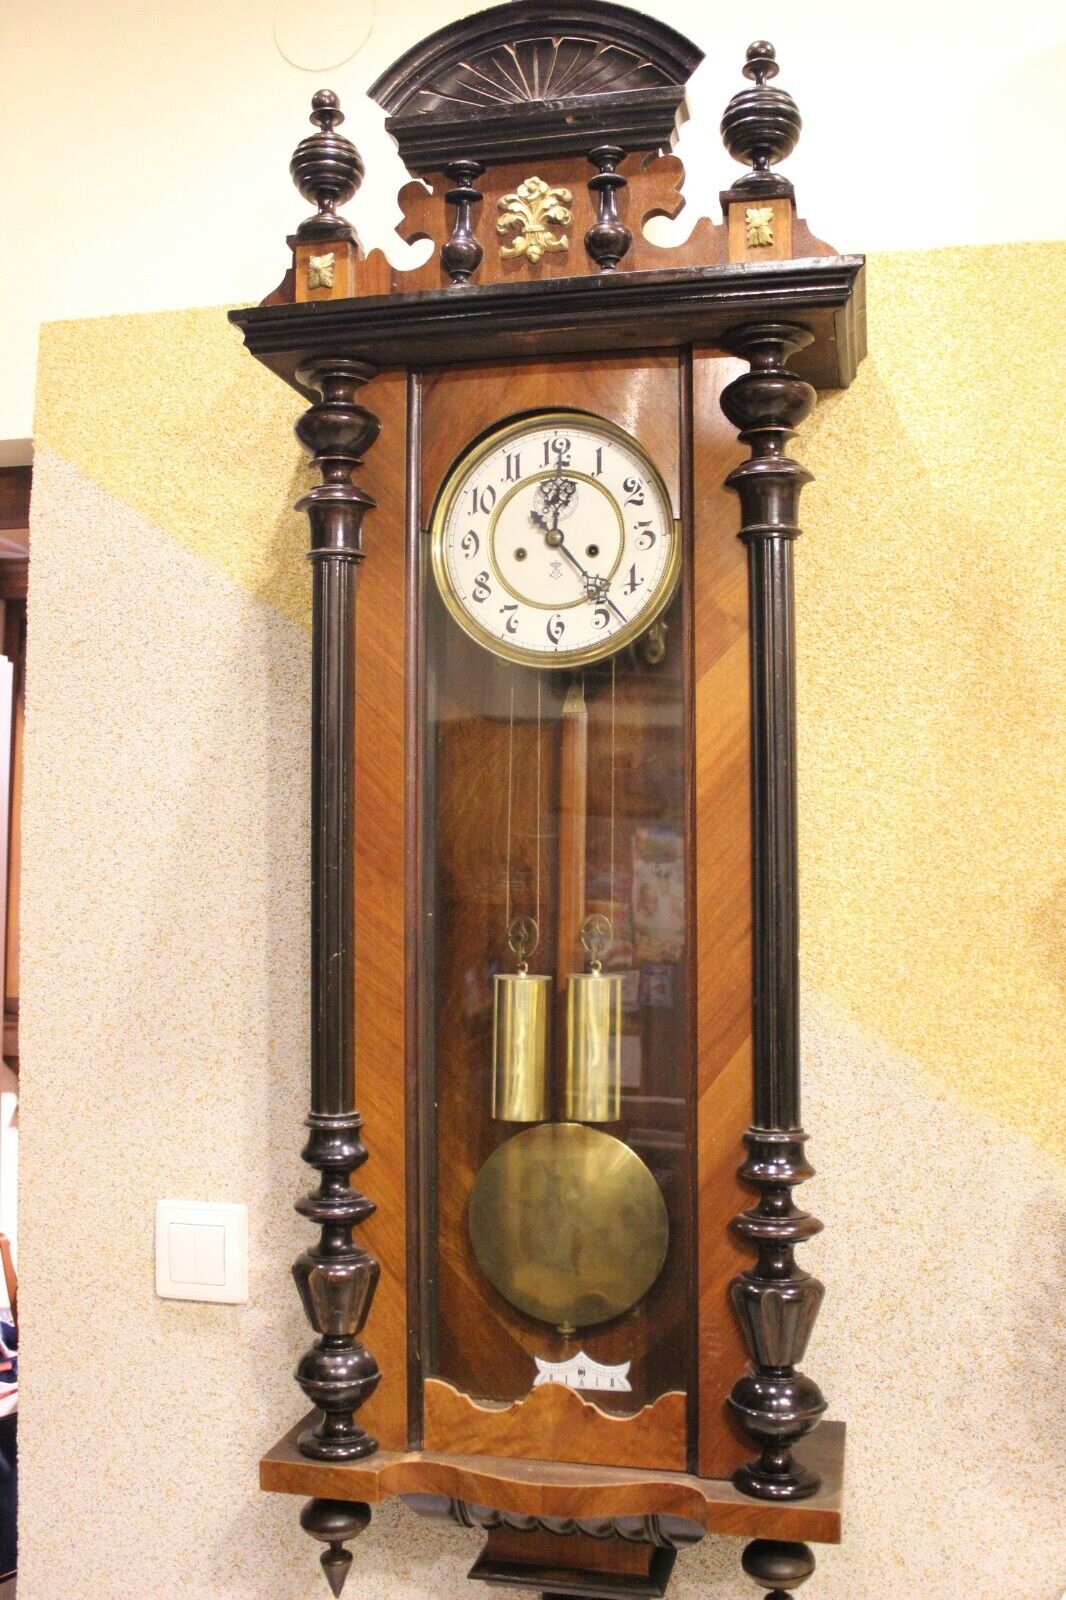  GERMANIA  2 weight  GUSTAV BECKER  wall clock  at 1904